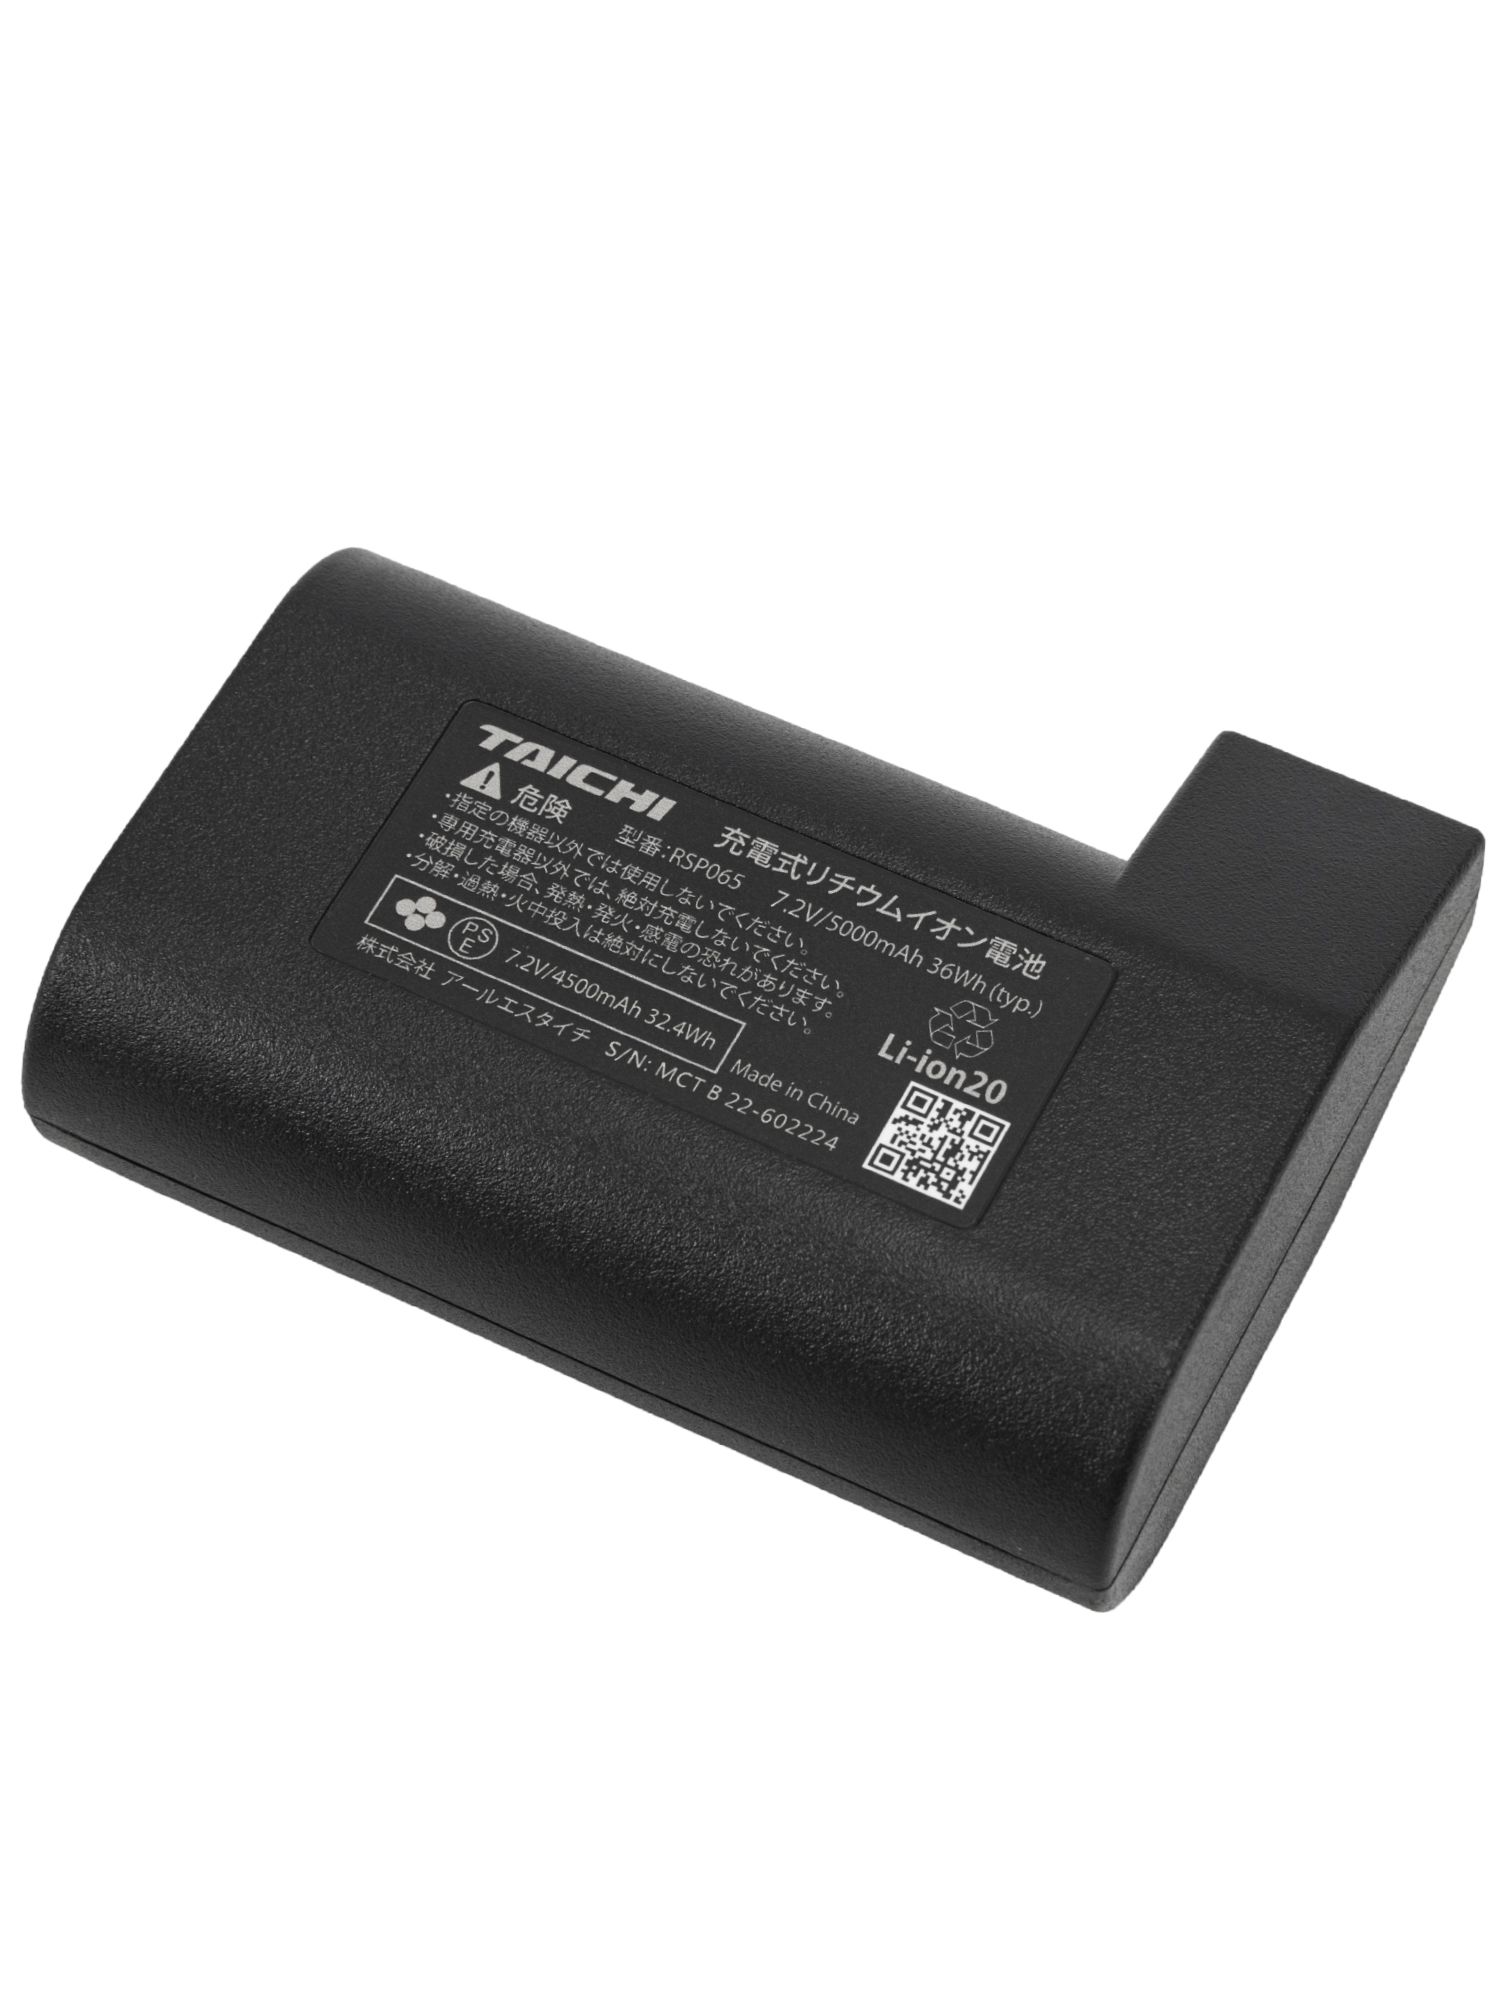 RSP065 | e-HEAT 7.2V Spare battery for e-HEAT/ Jacket/Glove/Vest(1pc.)